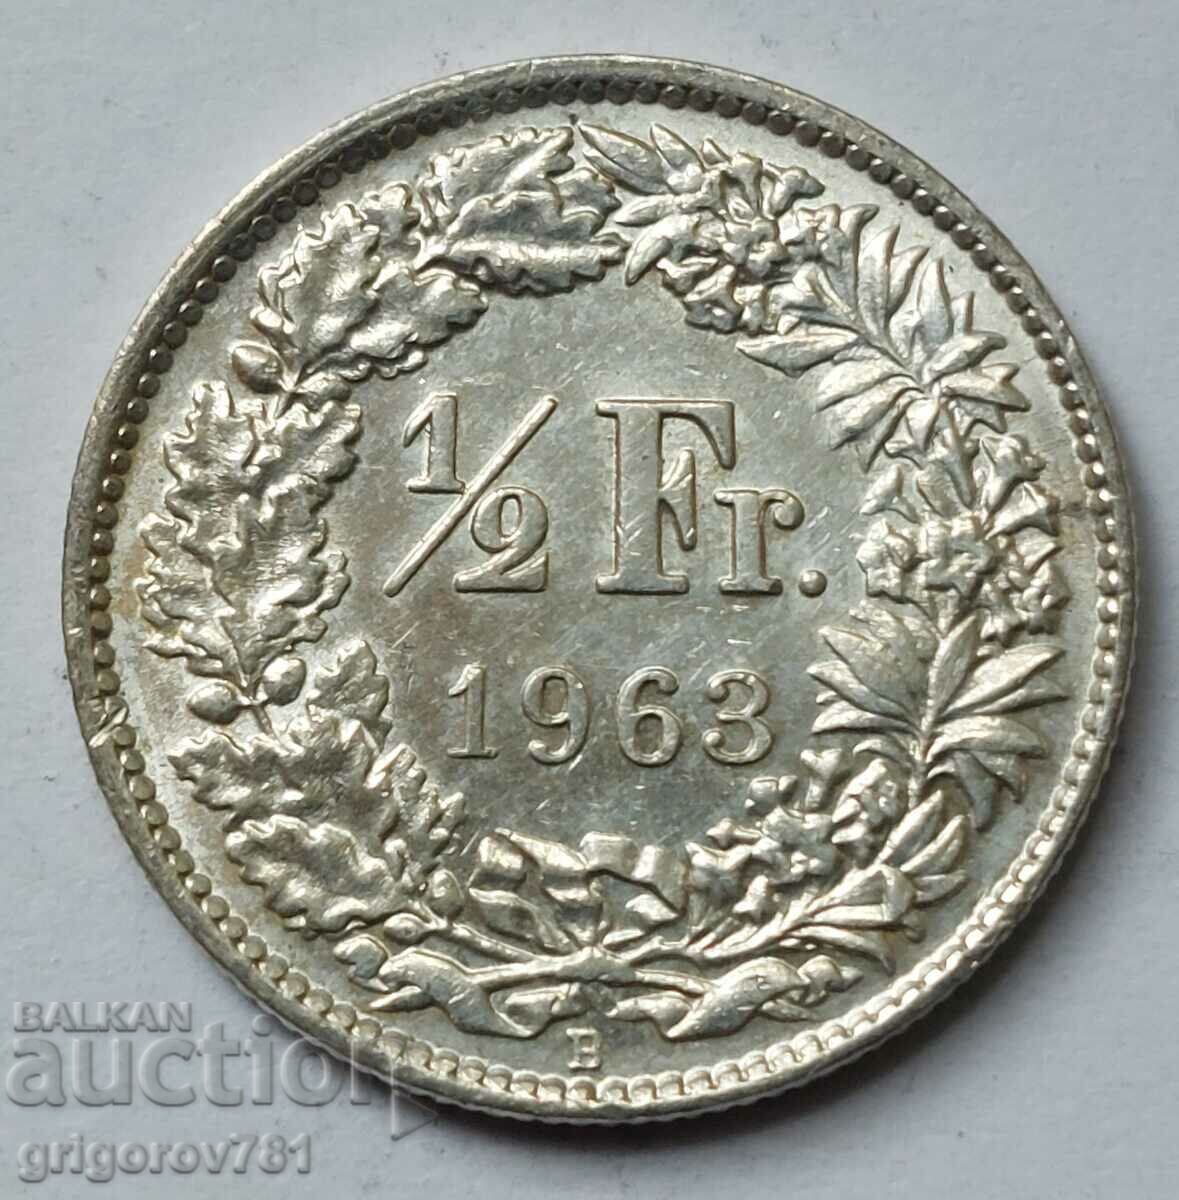 1/2 Franc Silver Switzerland 1963 B - Silver Coin #51